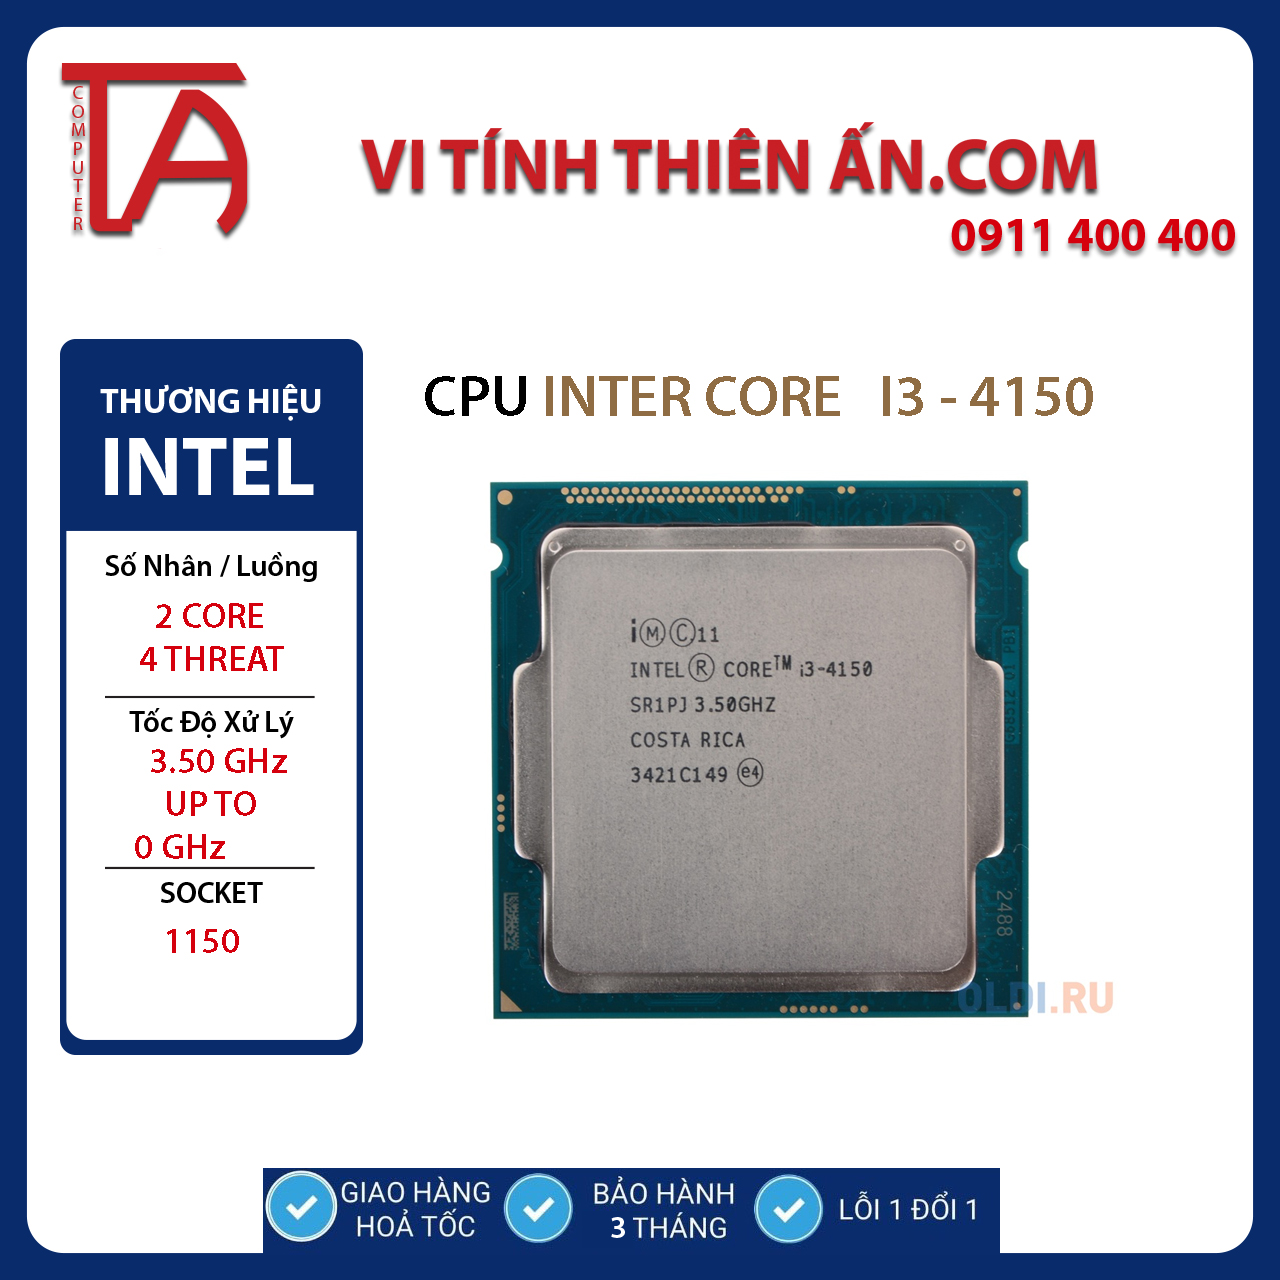 Intel® Xeon E3-1220 v3